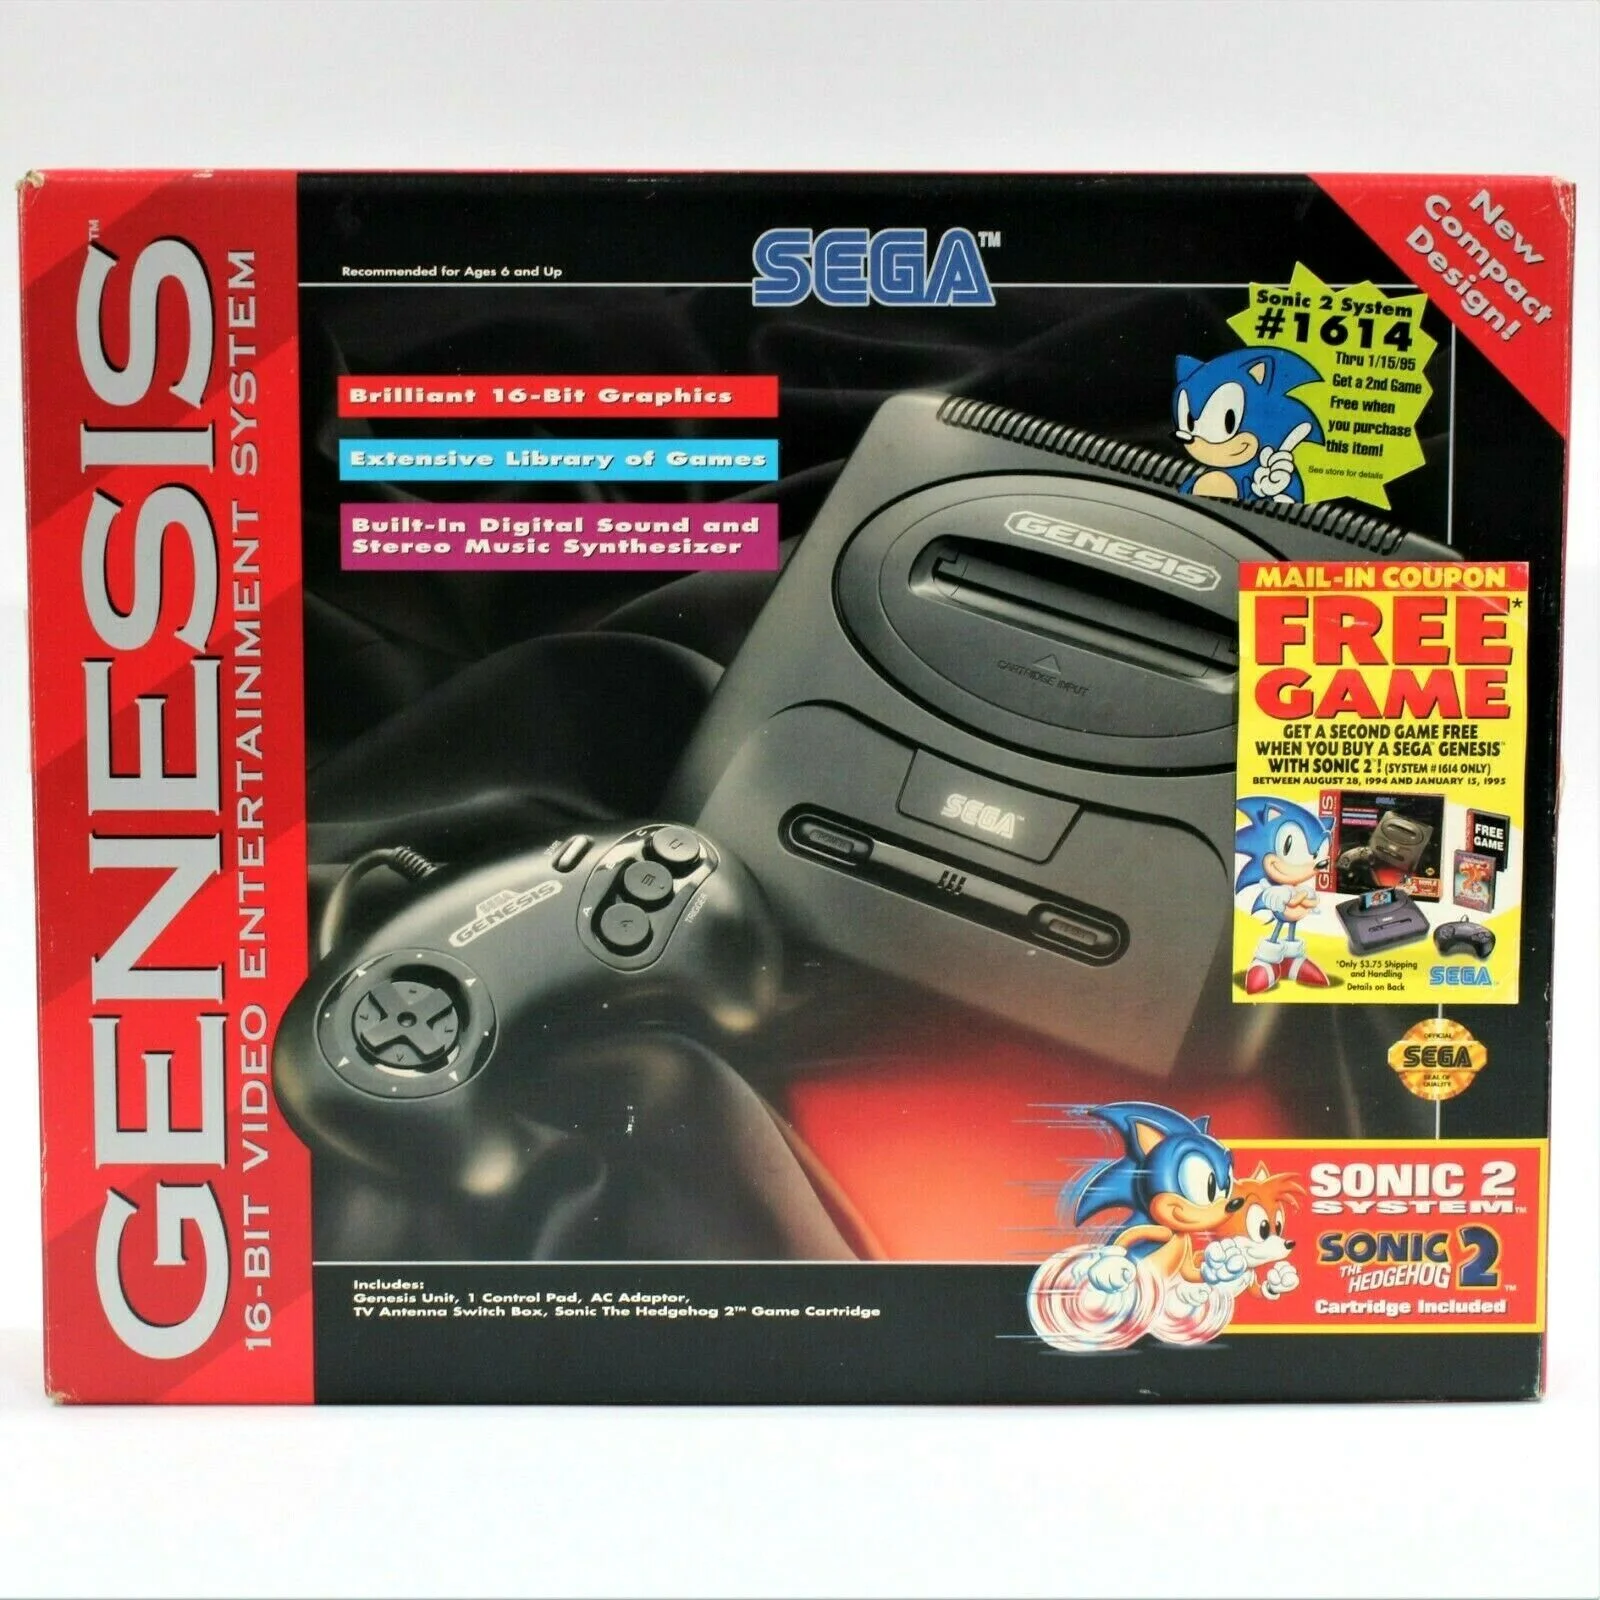 Sega Genesis Model 2 Sonic 2 System Coupon Bundle - Consolevariations